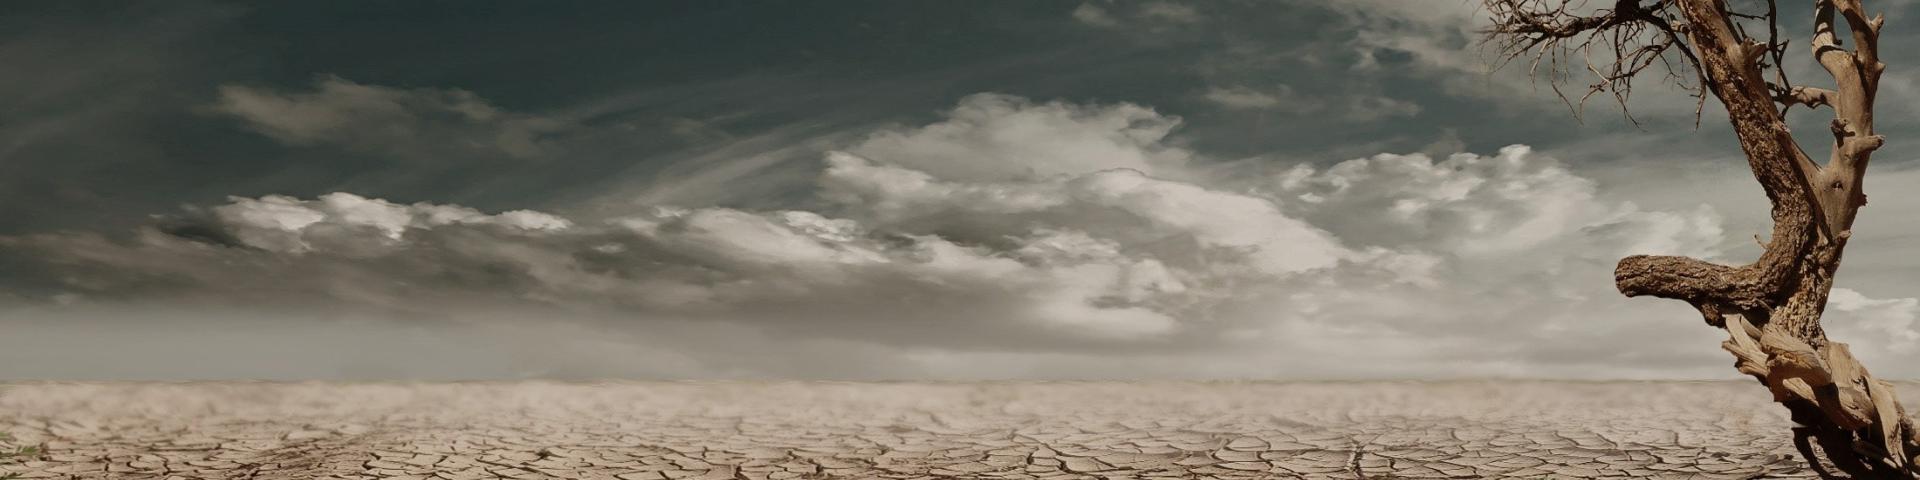 Climate change_drought-pexels-pixabay-60013